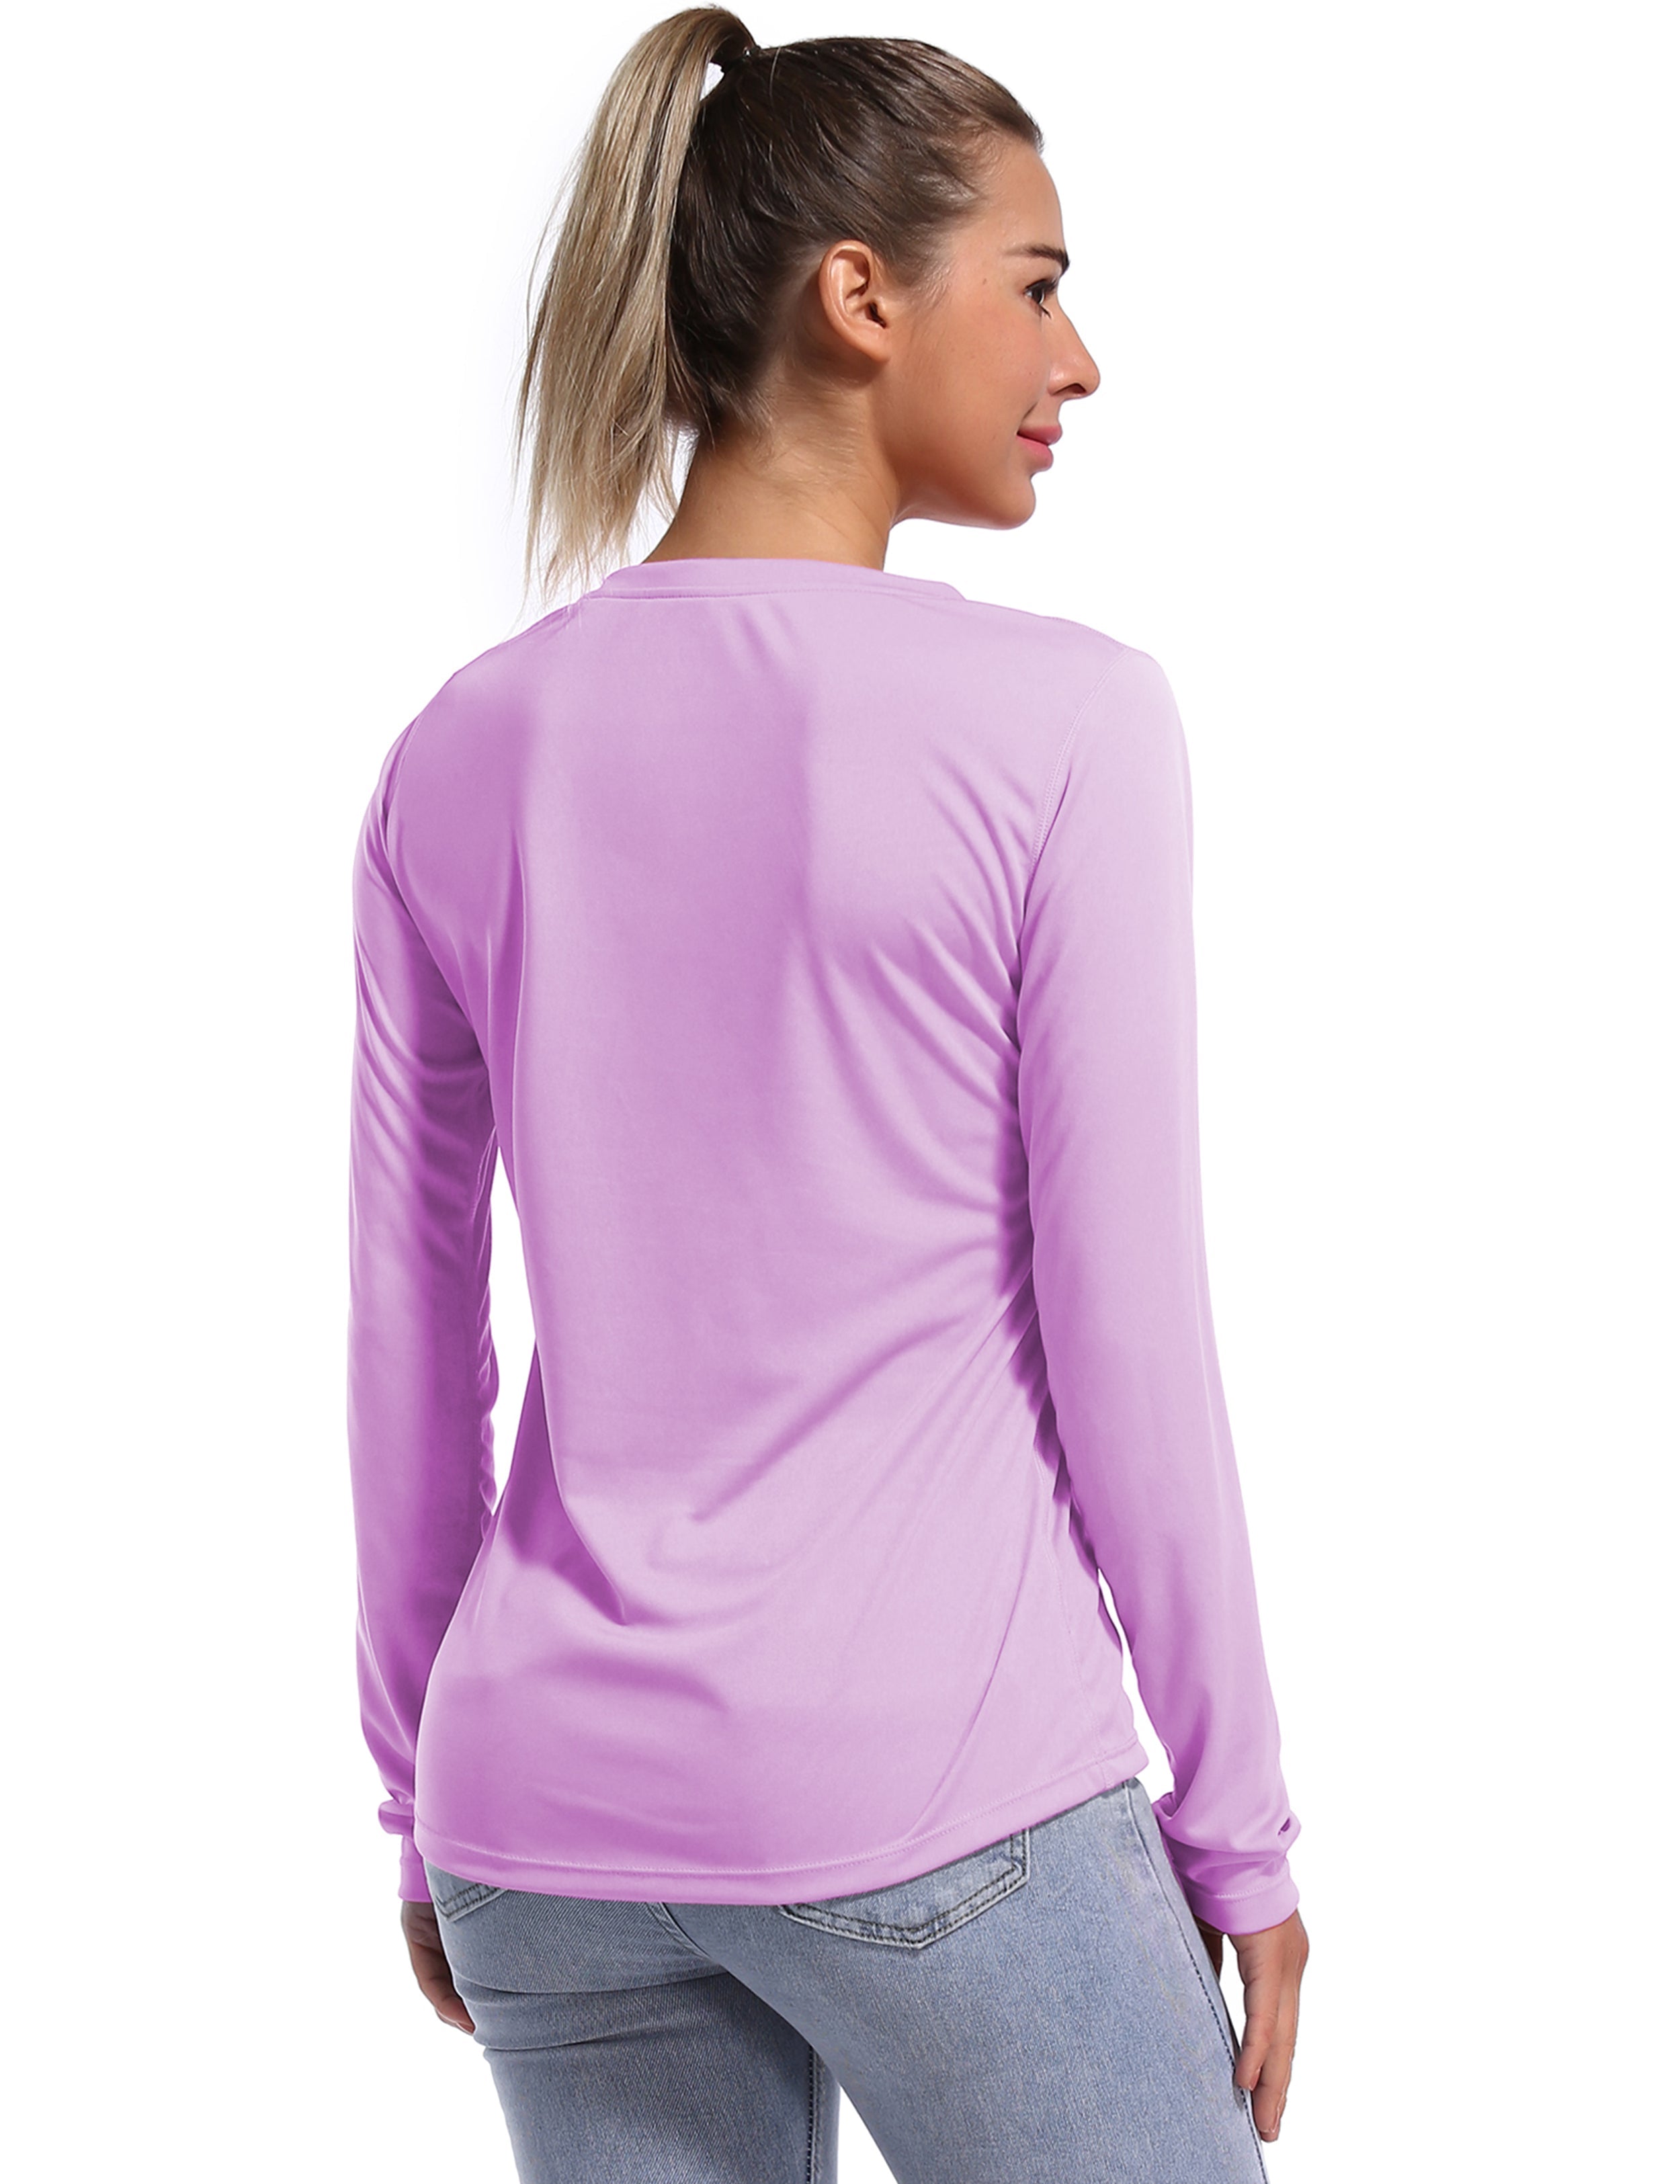 V Neck Long Sleeve Athletic Shirts purple_Running